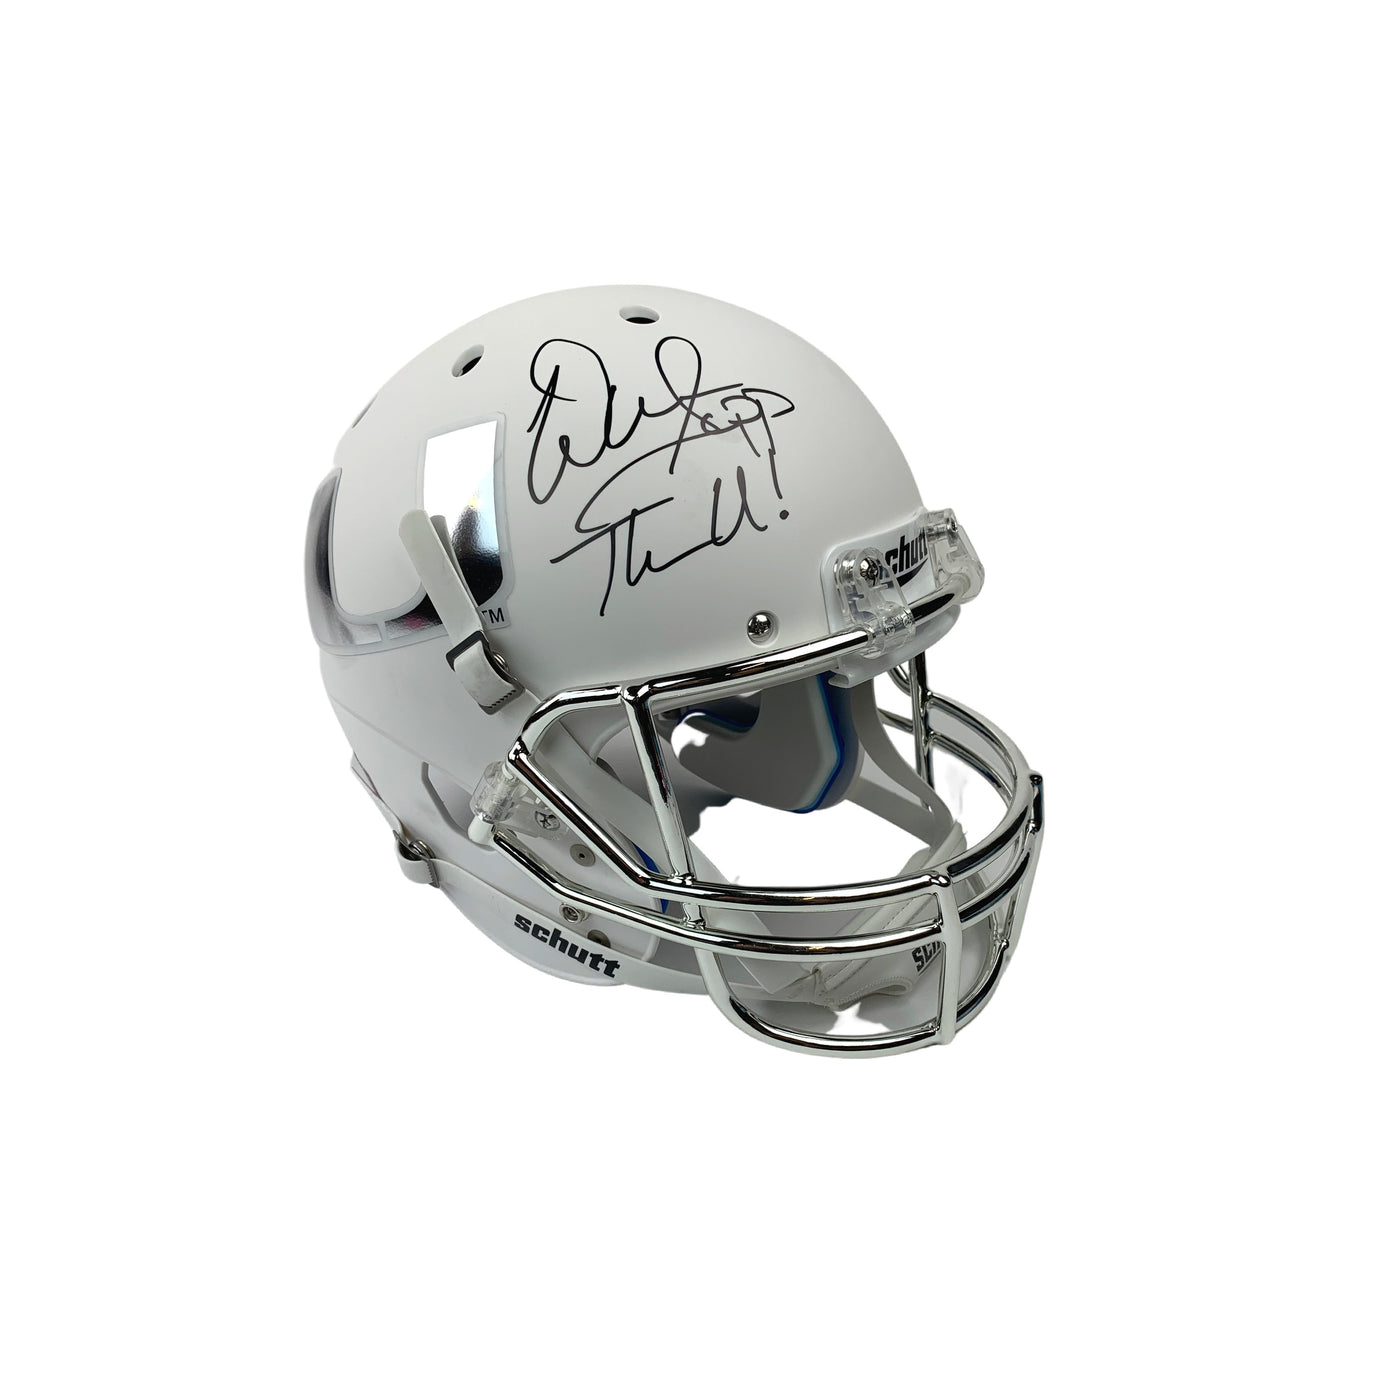 Warren Sapp Autograph Full Size Helmet University of Miami "The U" Signed BAS COA